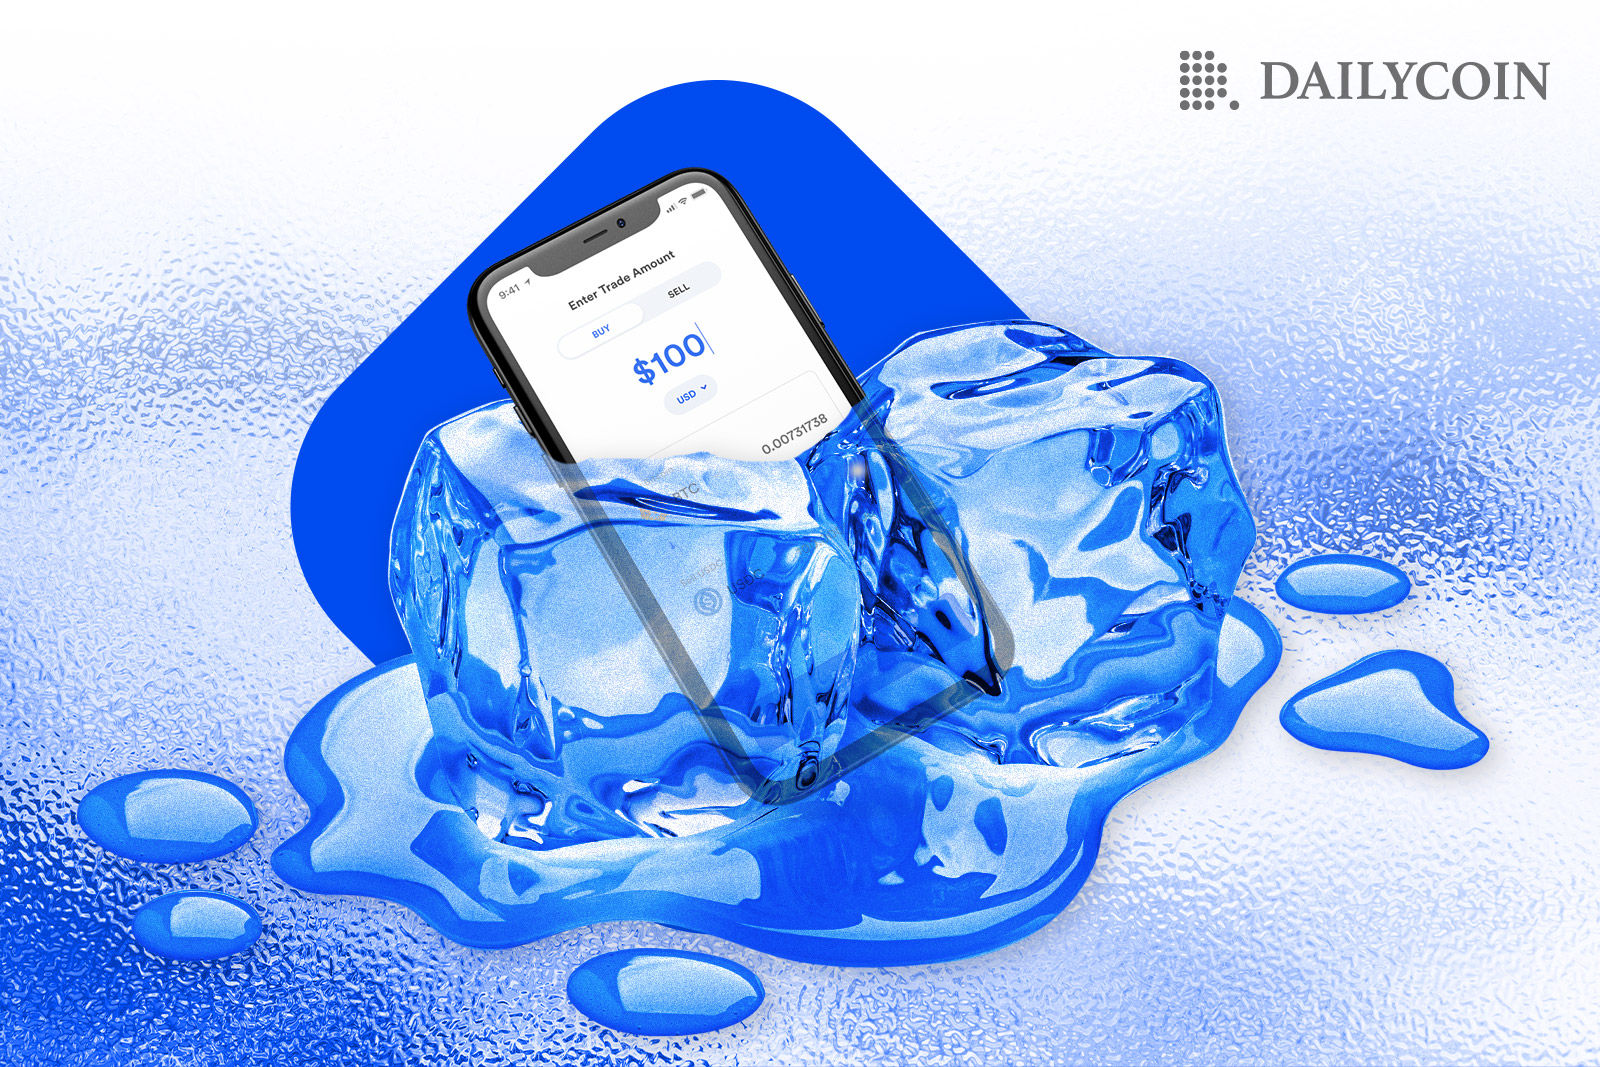 Phone frozen inside an ice cube in front of BlockFi logo